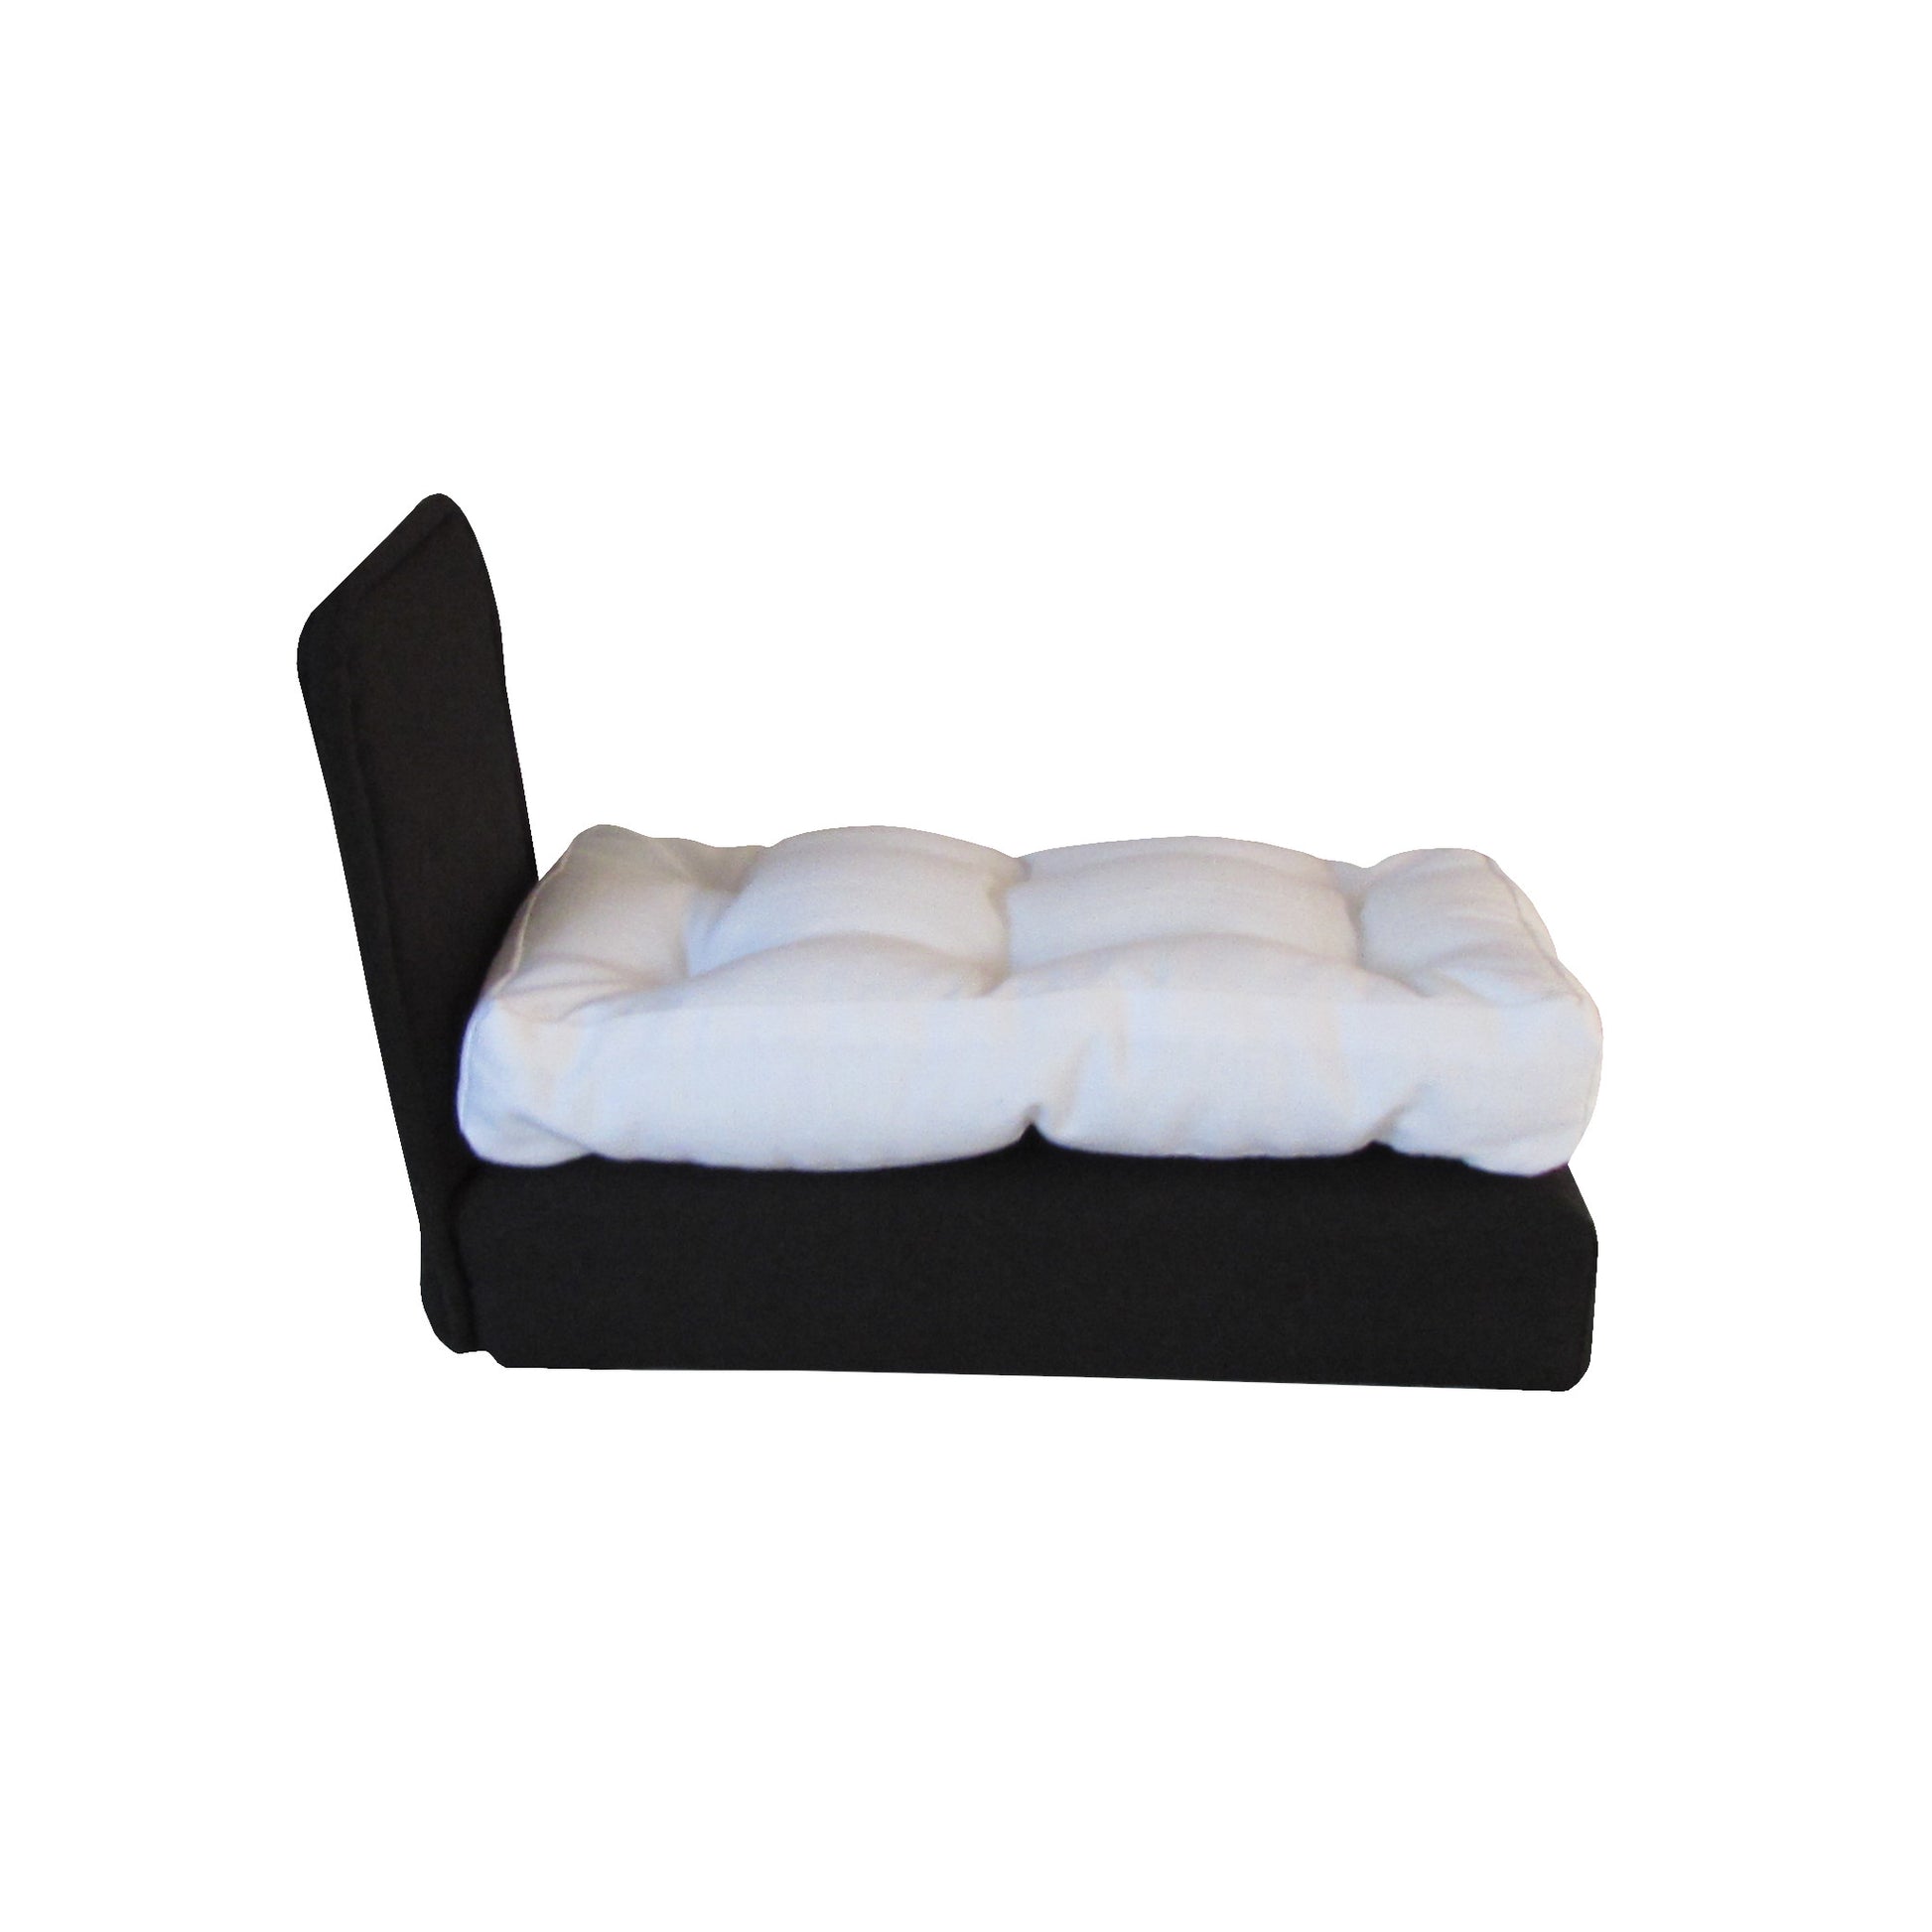 Upholstered Black Doll Bed for 6.5-inch dolls